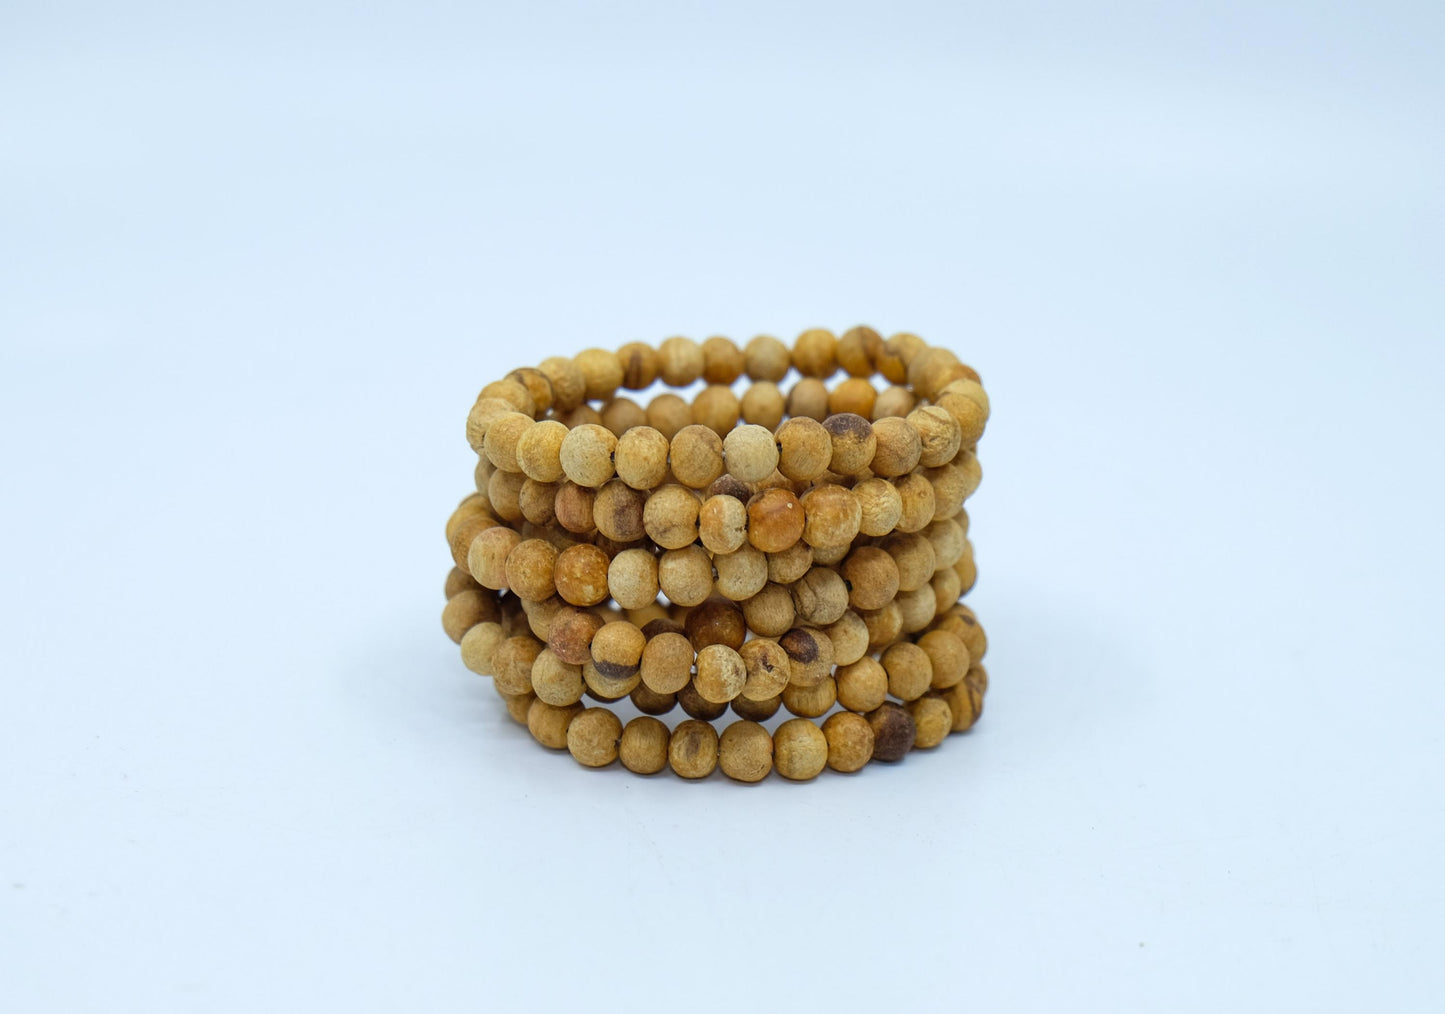 Palo Santo Bracelet (small bead)